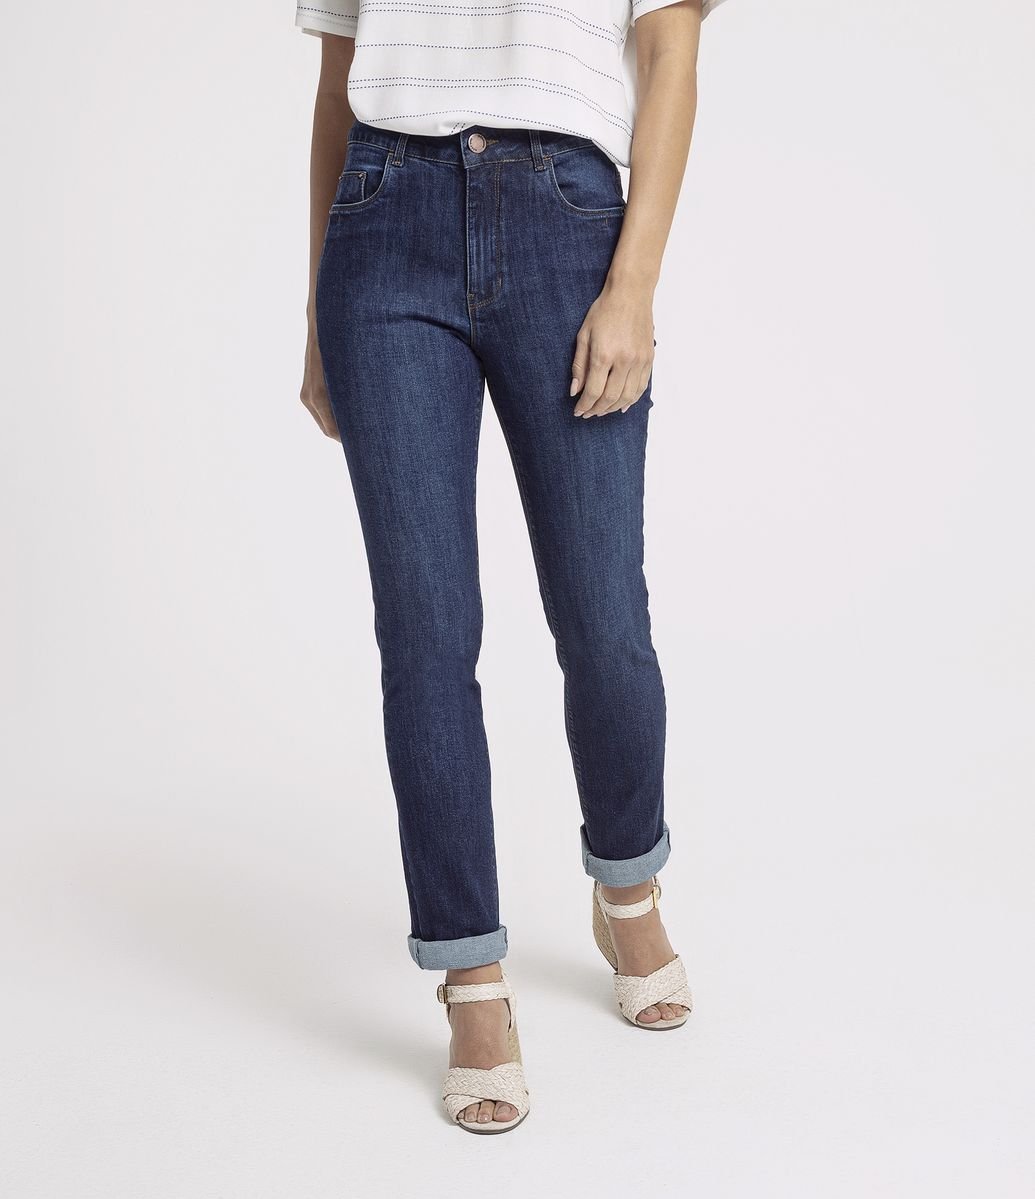 calças jeans renner feminina